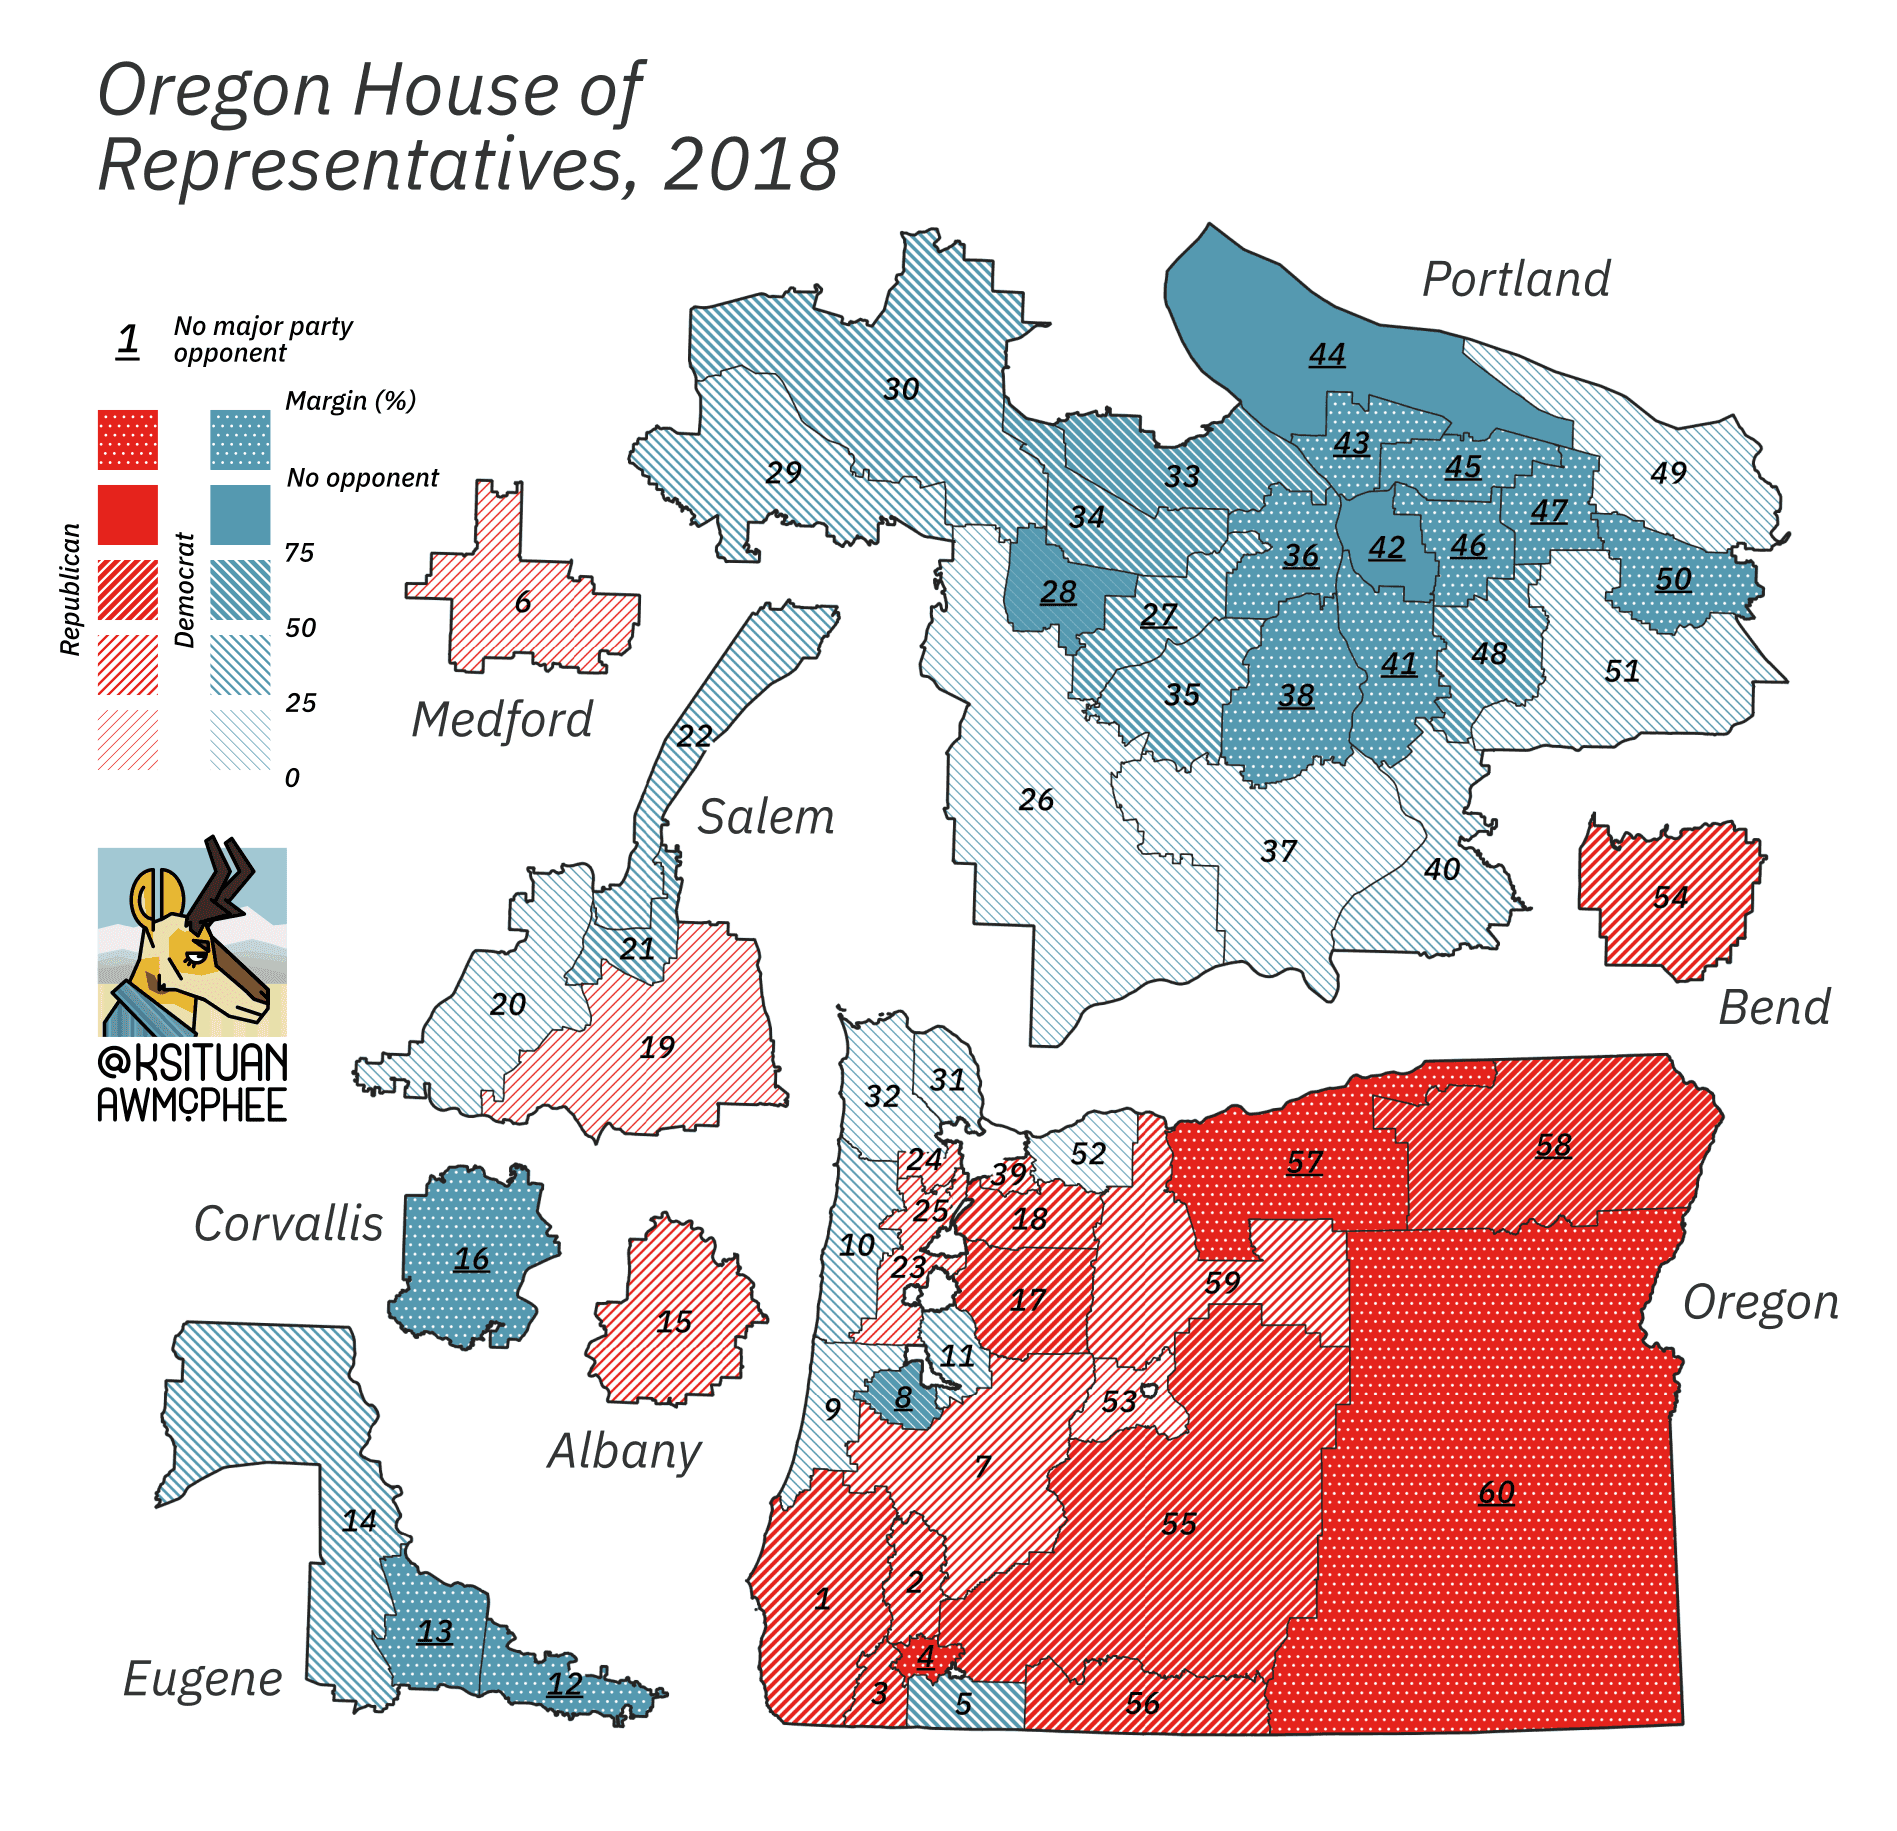 A political map of Oregon.